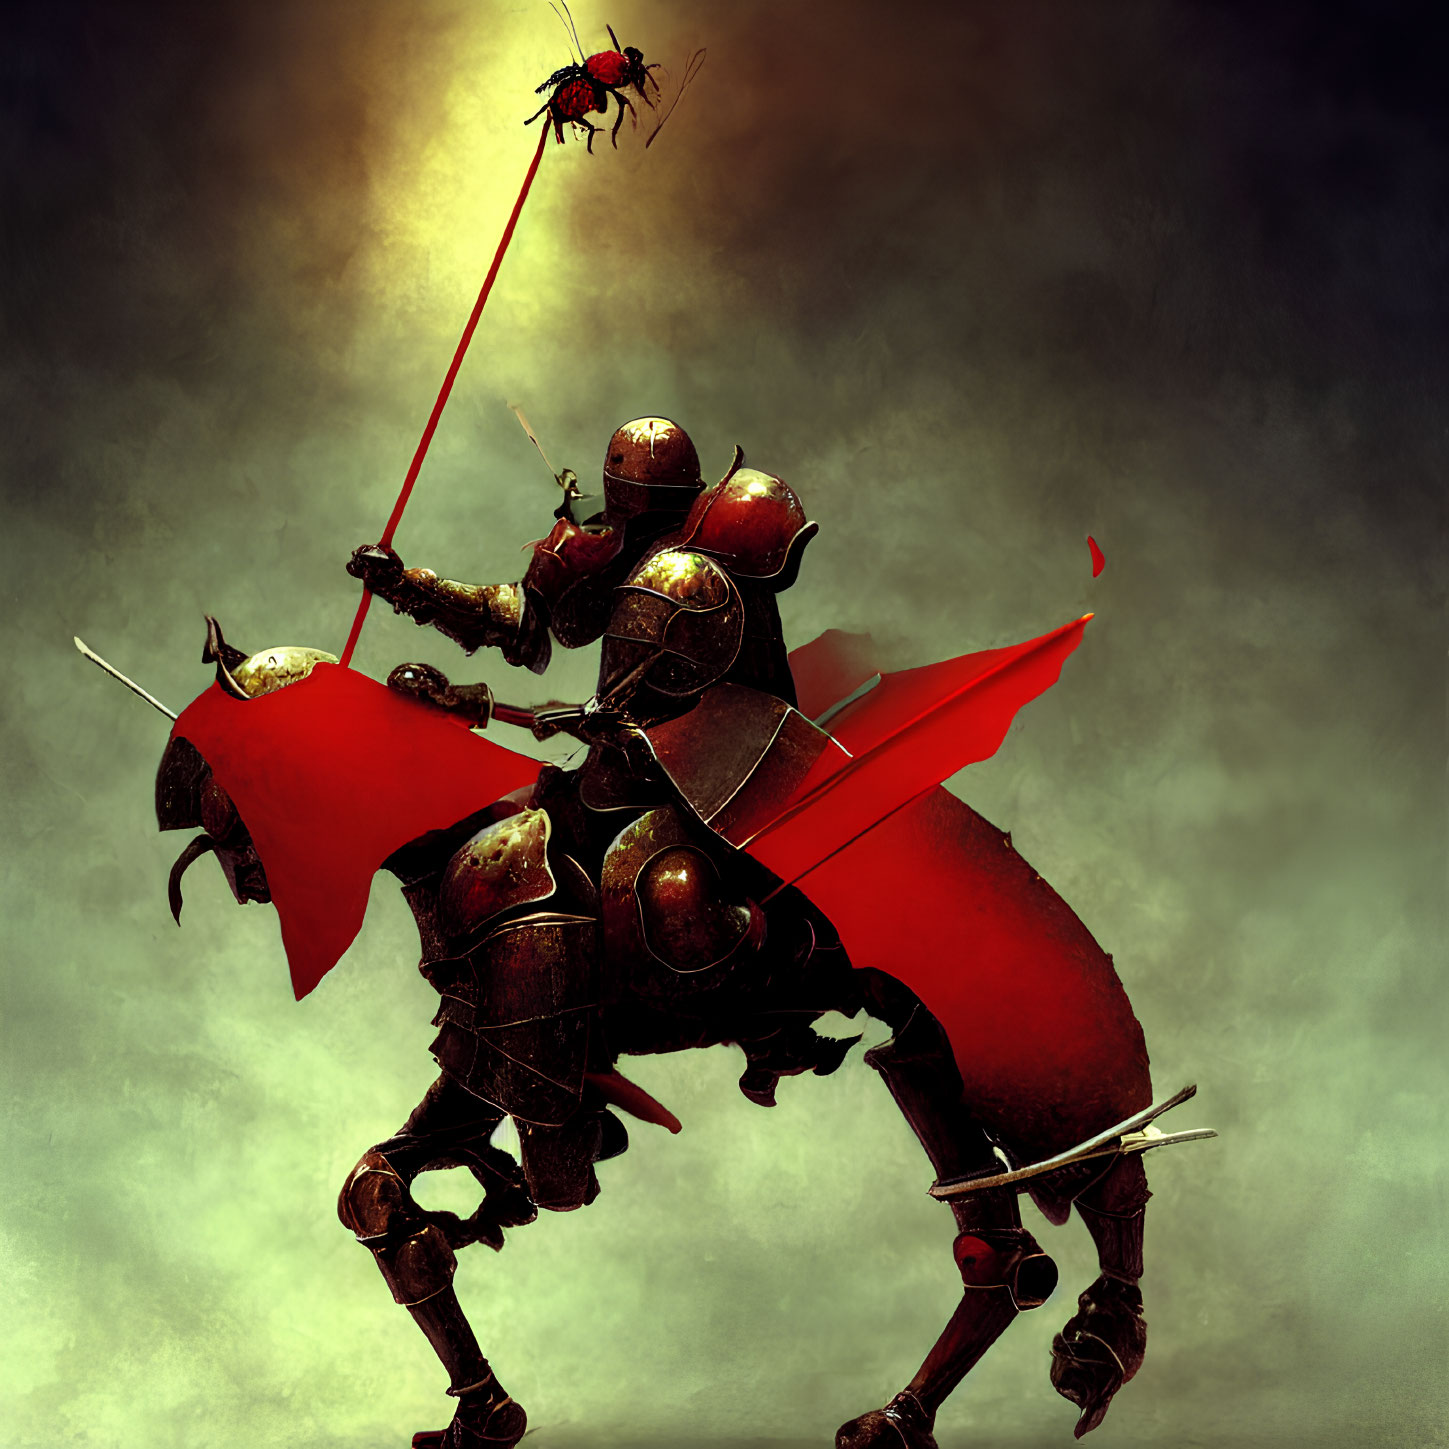 Dark-armored knight battles giant beetle under yellow sky